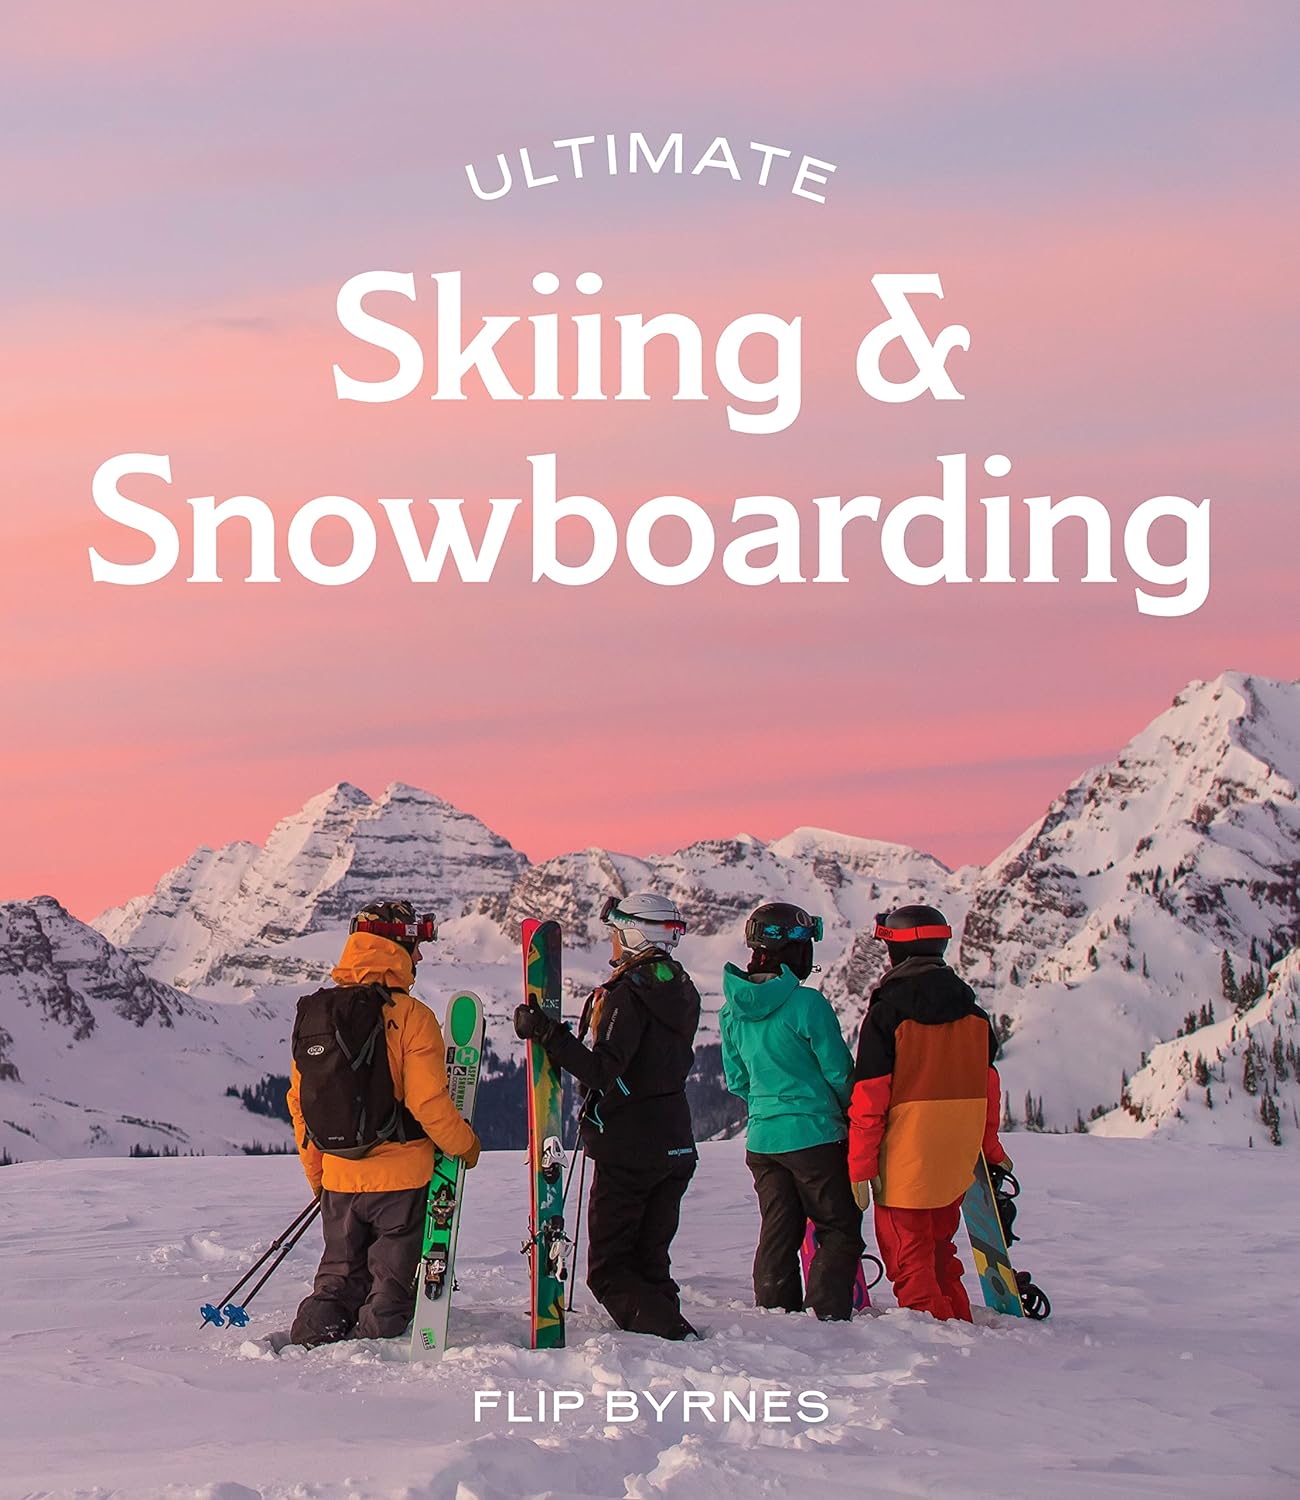 Ultimate Skiing & Snowboarding